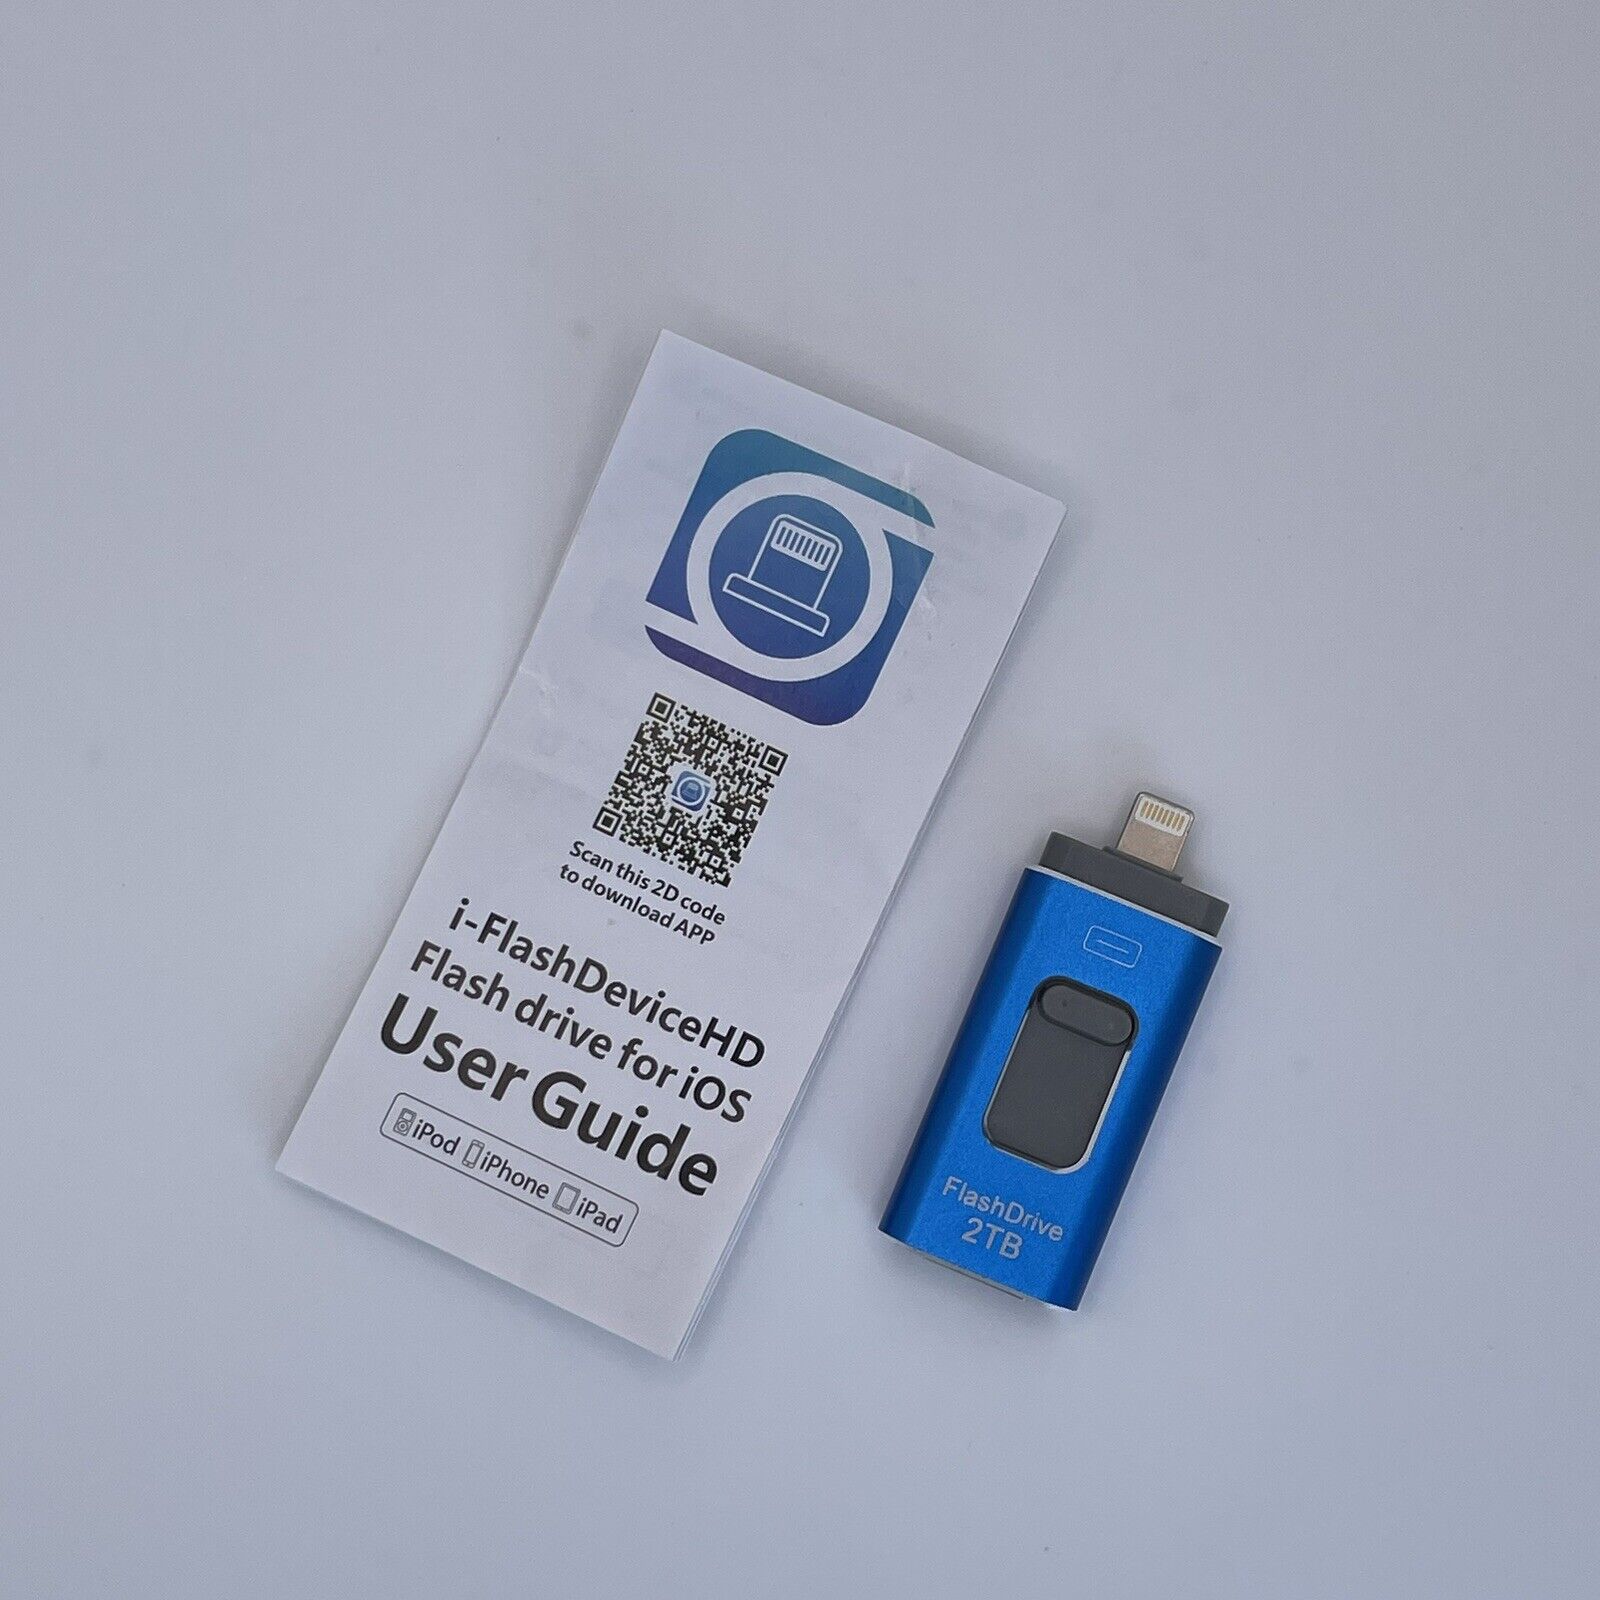 2TB USB 3.0 Flash Drive Memory Photo Stick for iPhone